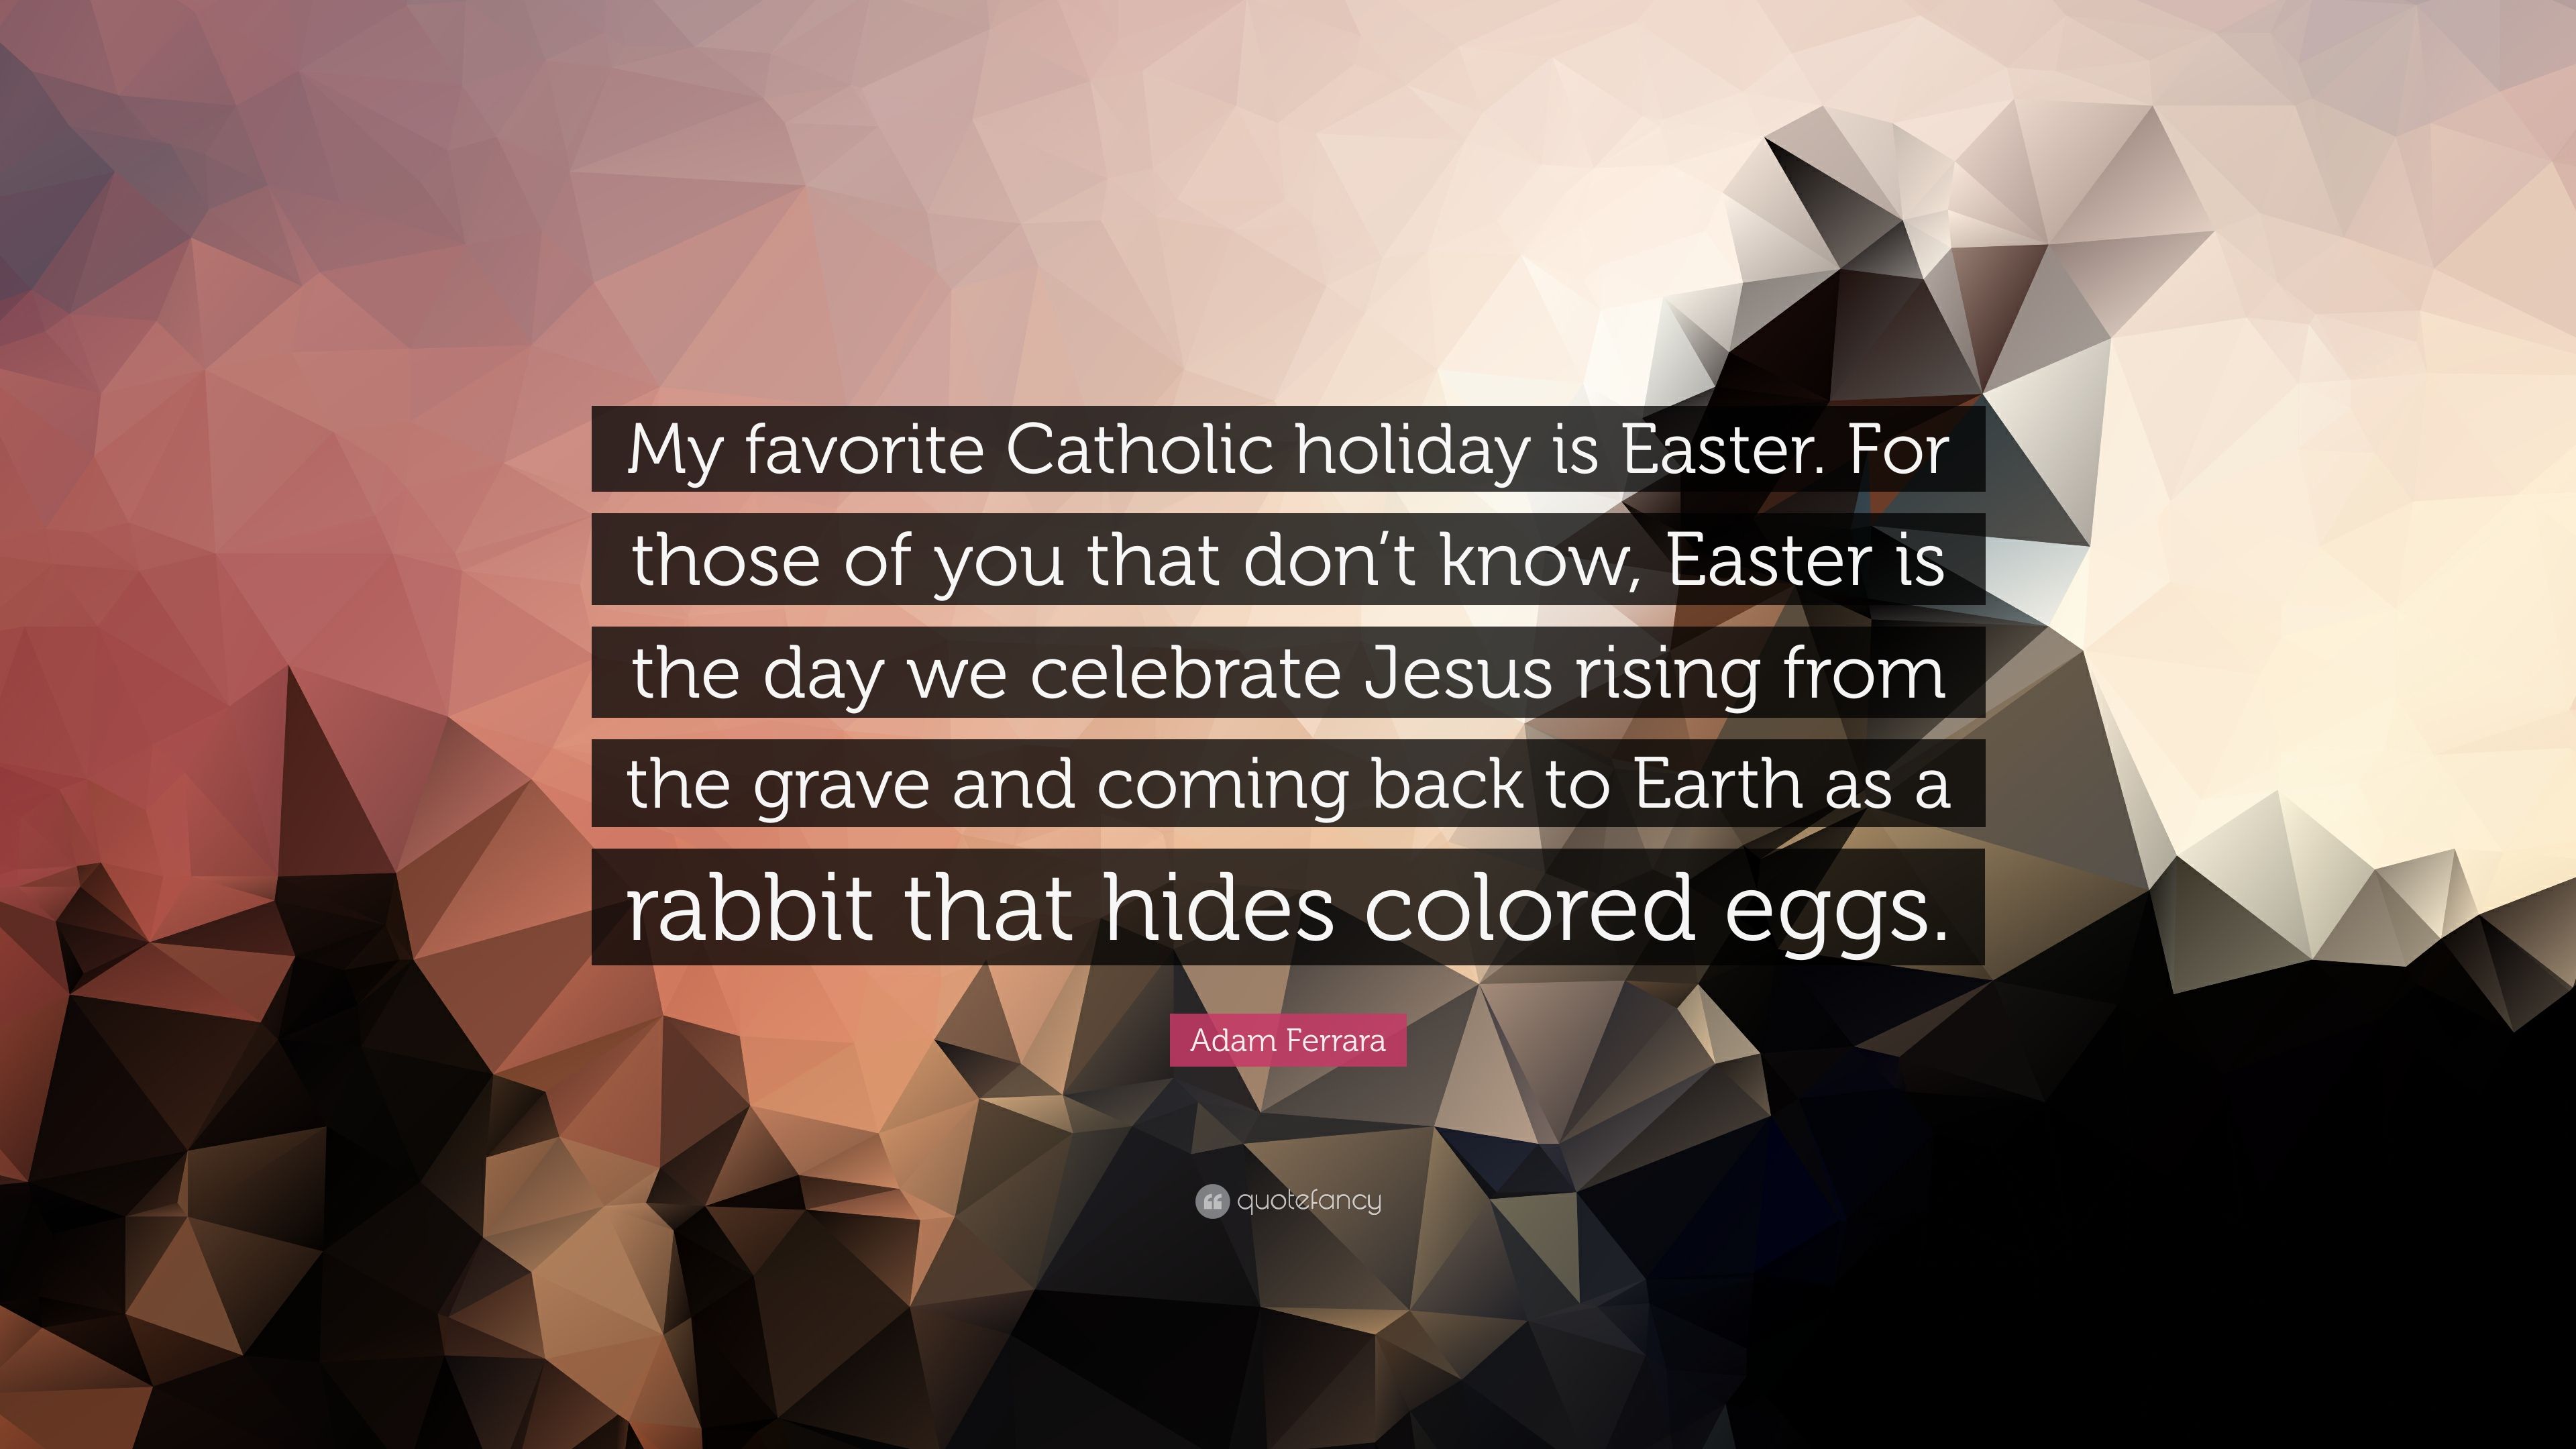 Adam Ferrara Quote: “My favorite Catholic holiday is Easter